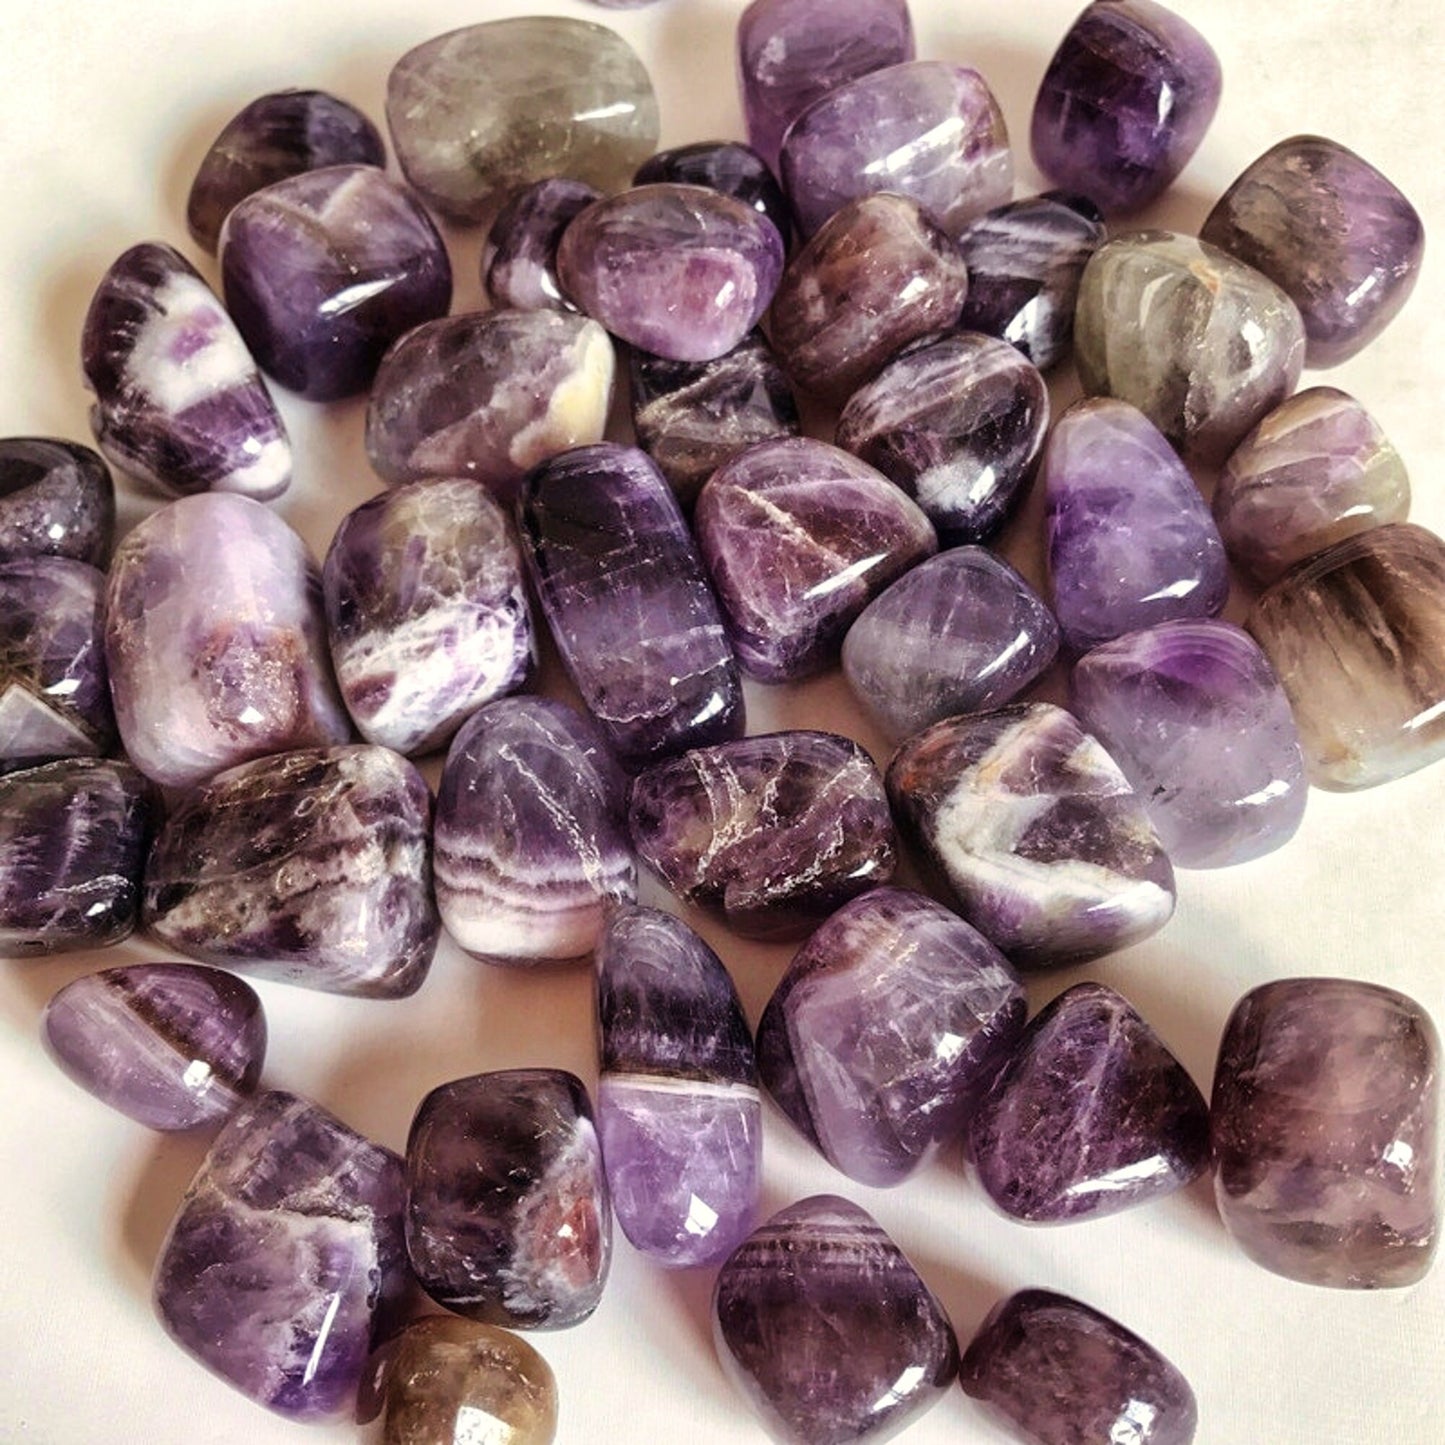 Natural Dream Amethyst Crystal Stones - 100g Bulk Tumbled Gems for Healing & Decoration